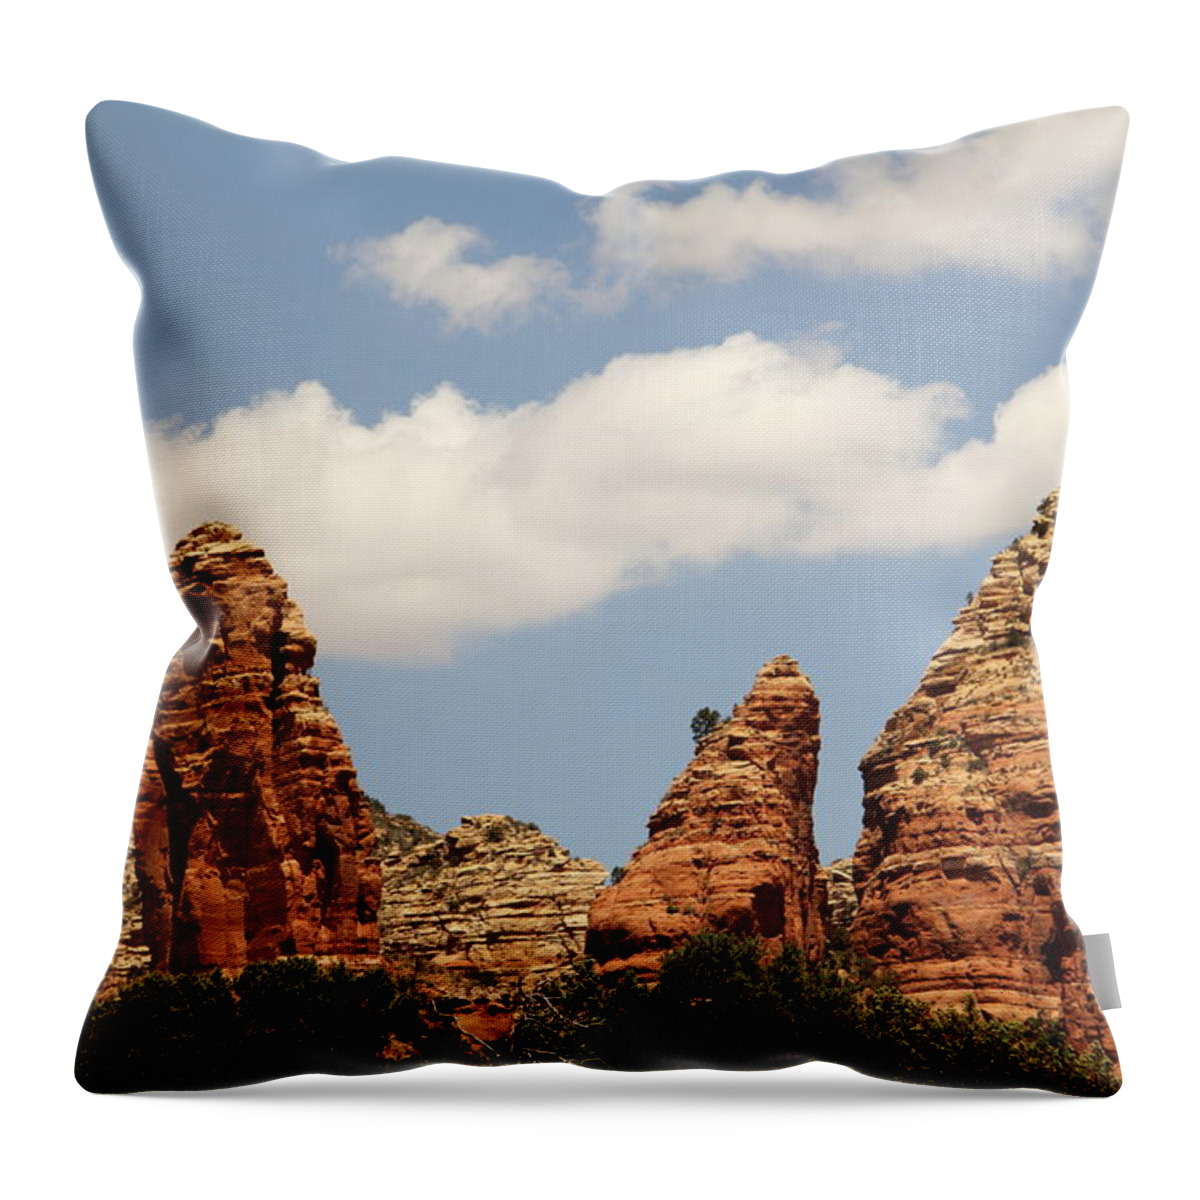 Scenics Throw Pillow featuring the photograph Red Rock Sedona Arizona Mountain by Sassy1902